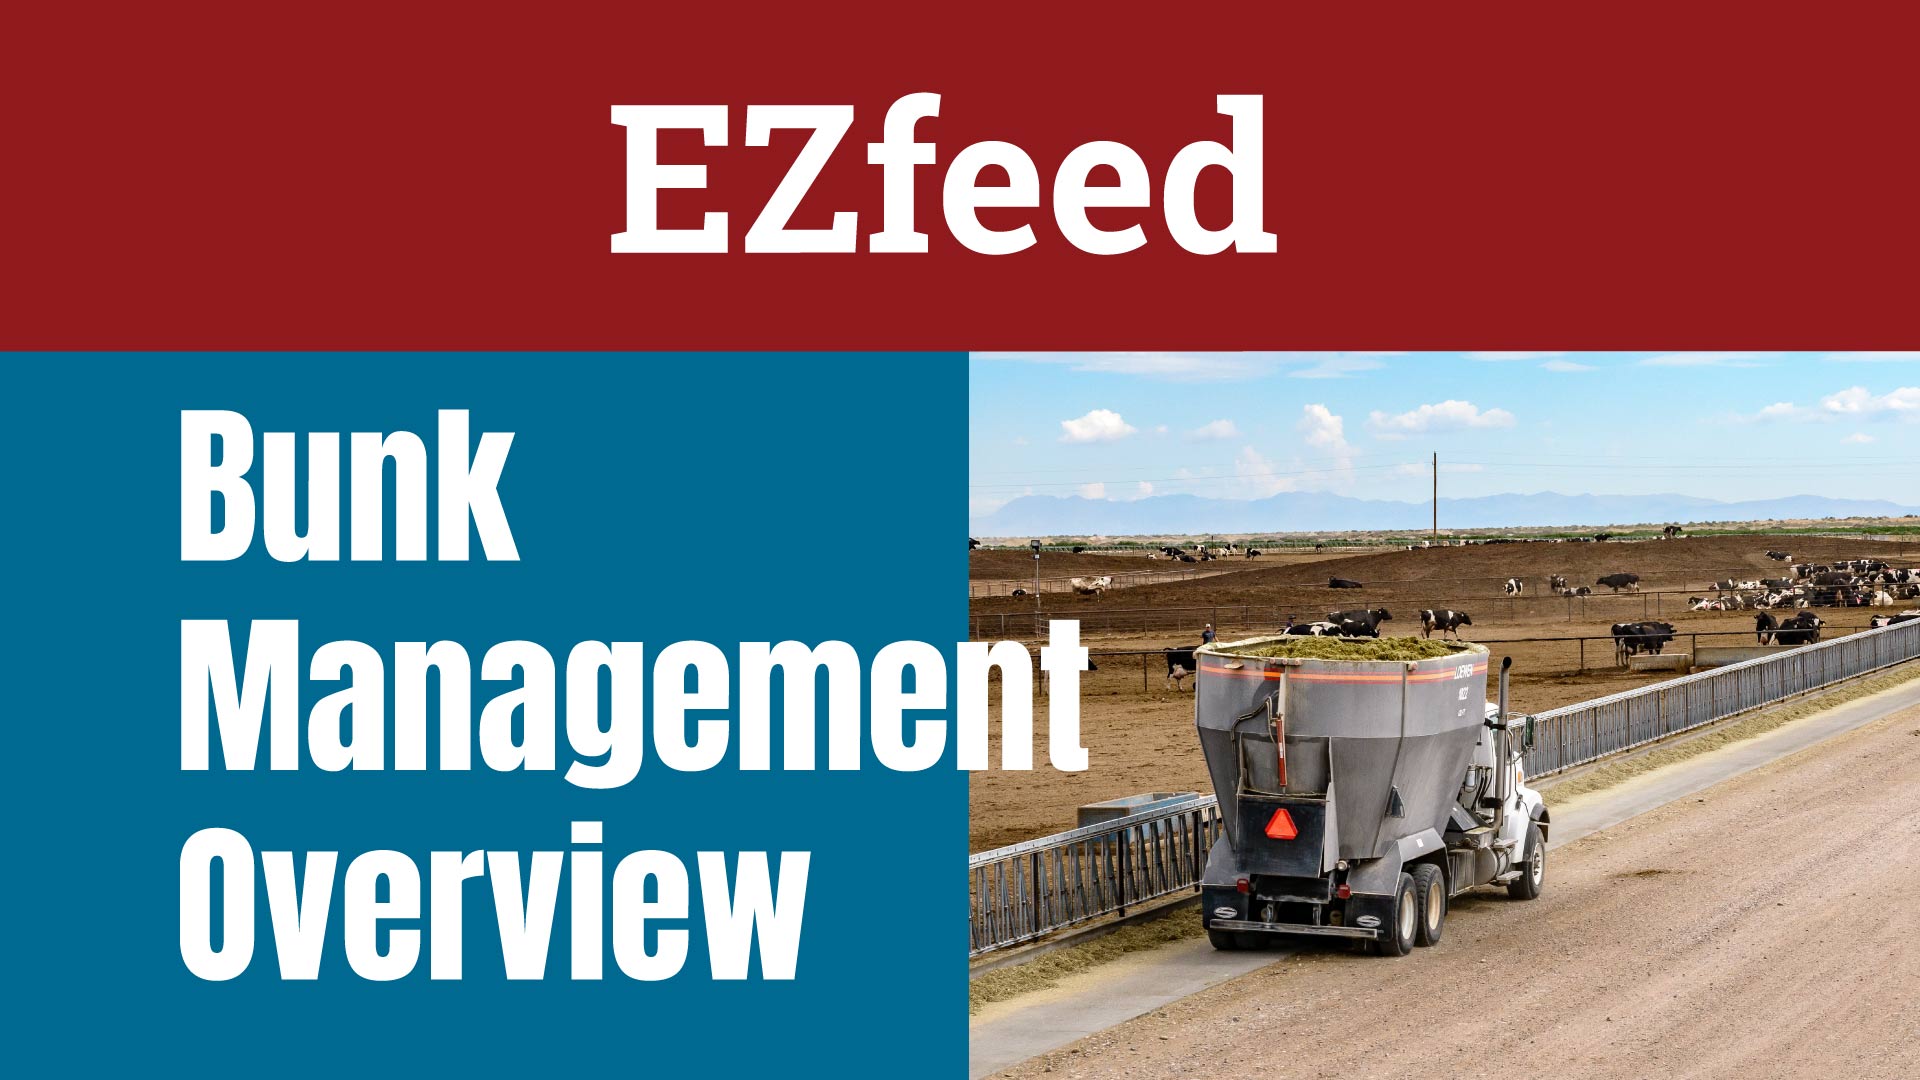 Bunk Management Overview